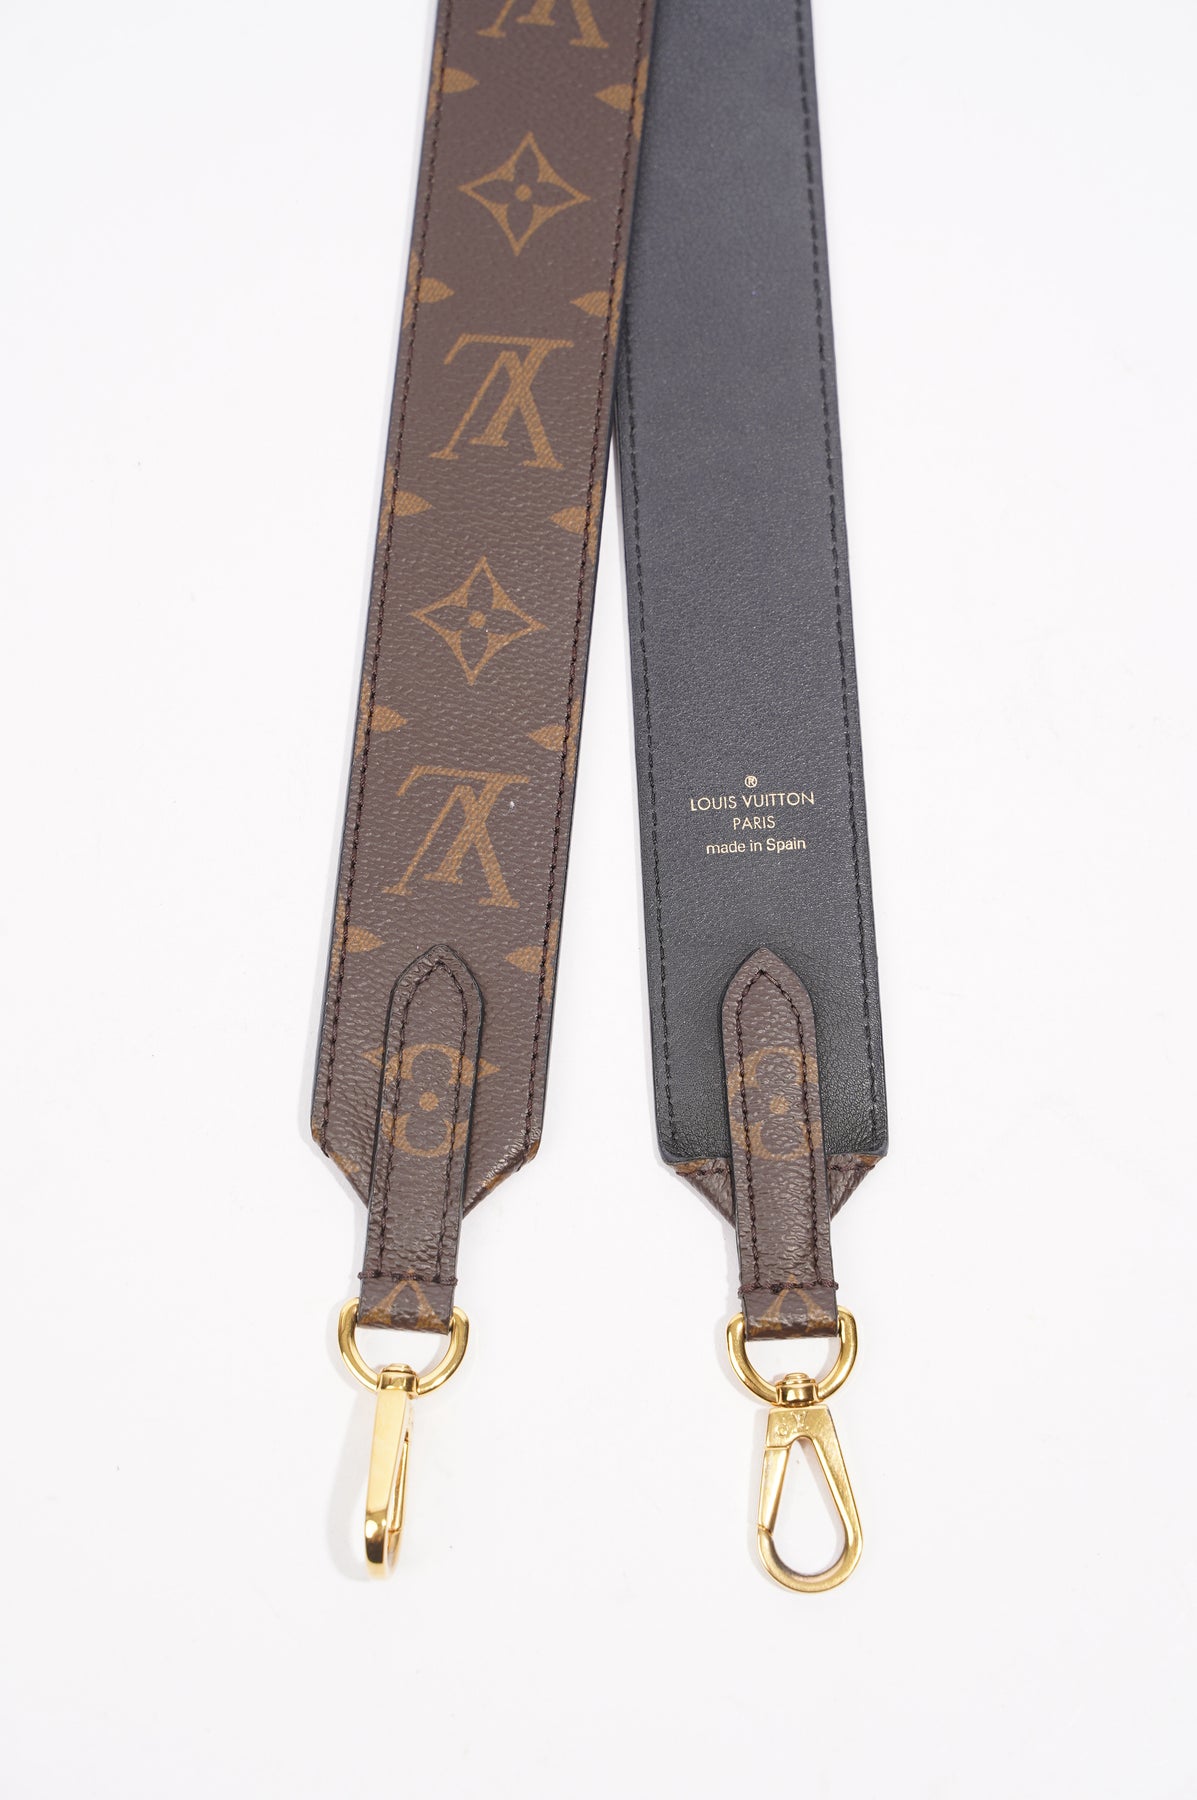 Louis Vuitton Monogram Canvas Shoulder Strap in Brown